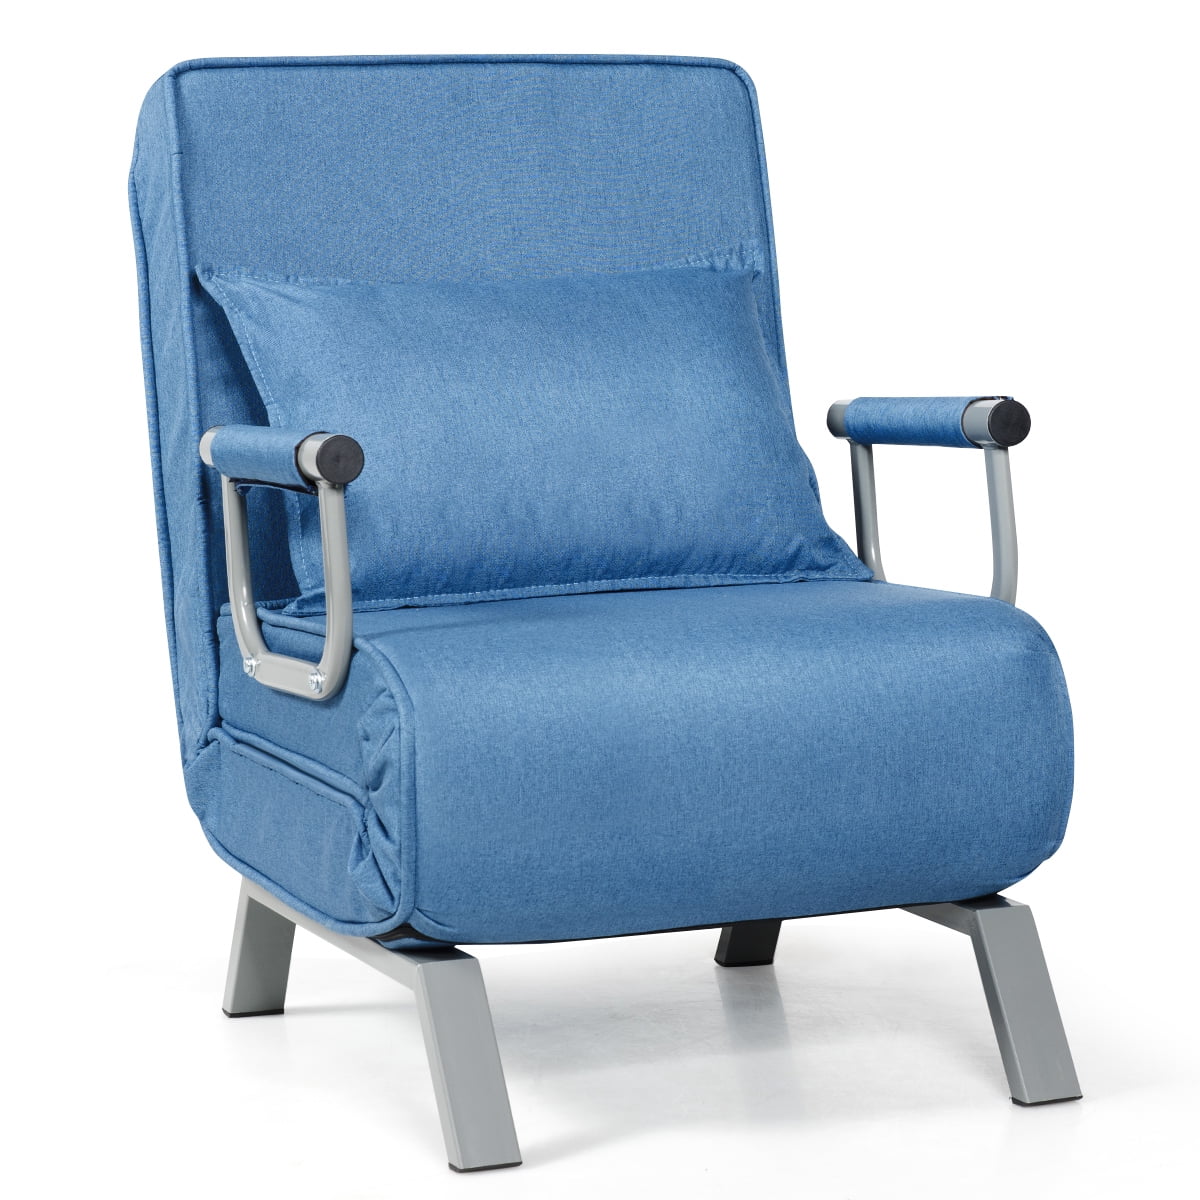 Giantex Sofa Bed Folding Arm Chair Sleeper 5 Position Recliner Full Padded Lounger Couch Walmart Com Walmart Com